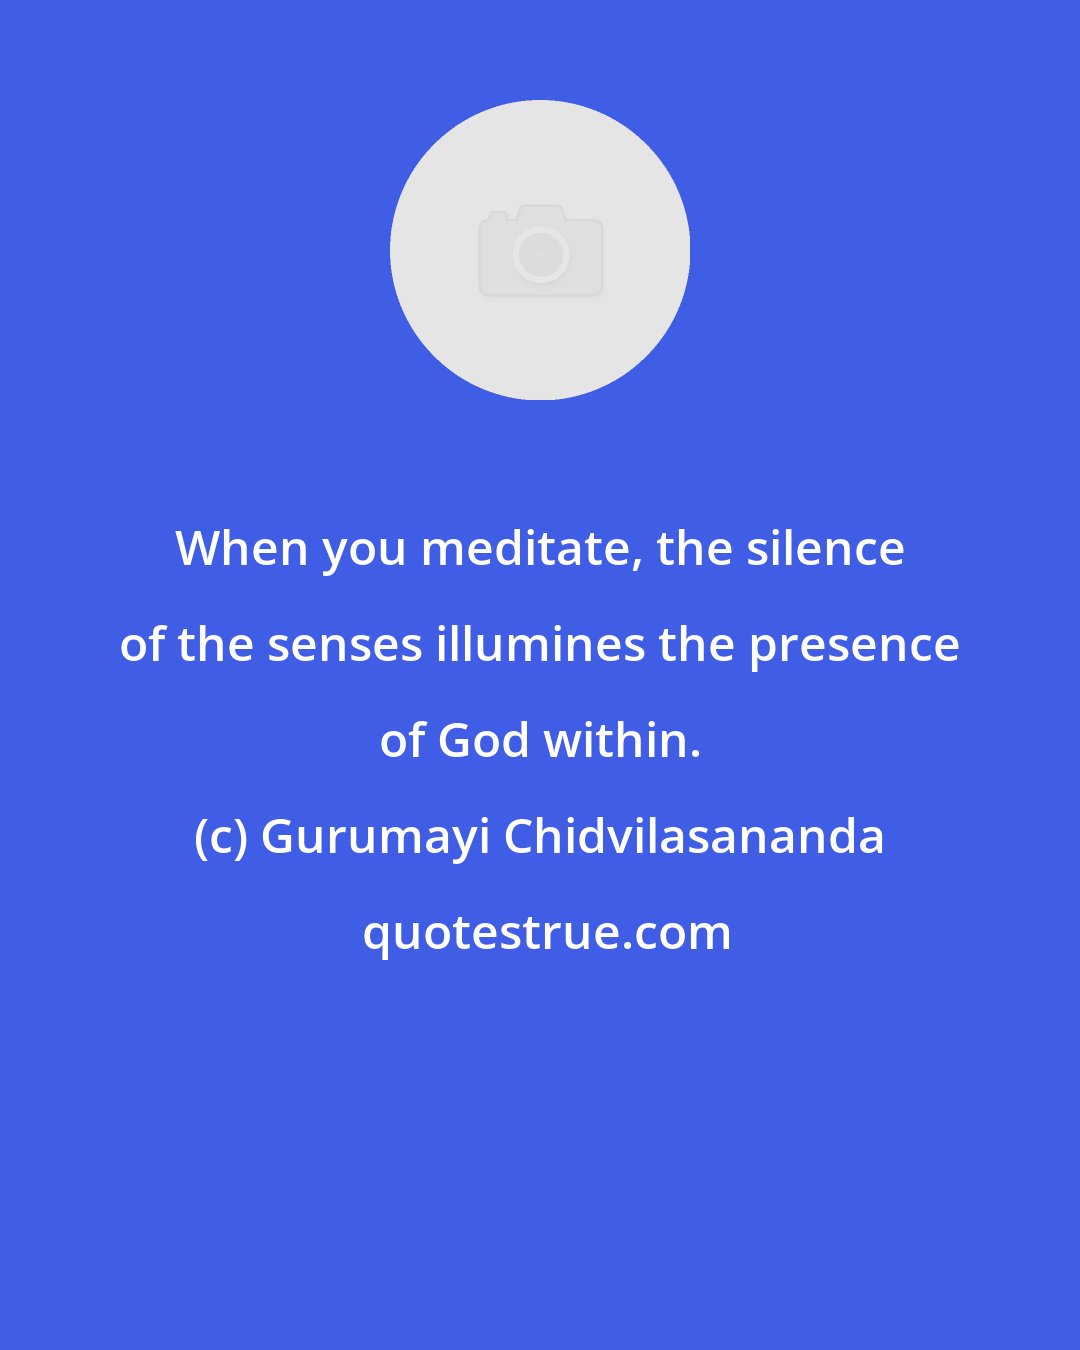 Gurumayi Chidvilasananda: When you meditate, the silence of the senses illumines the presence of God within.